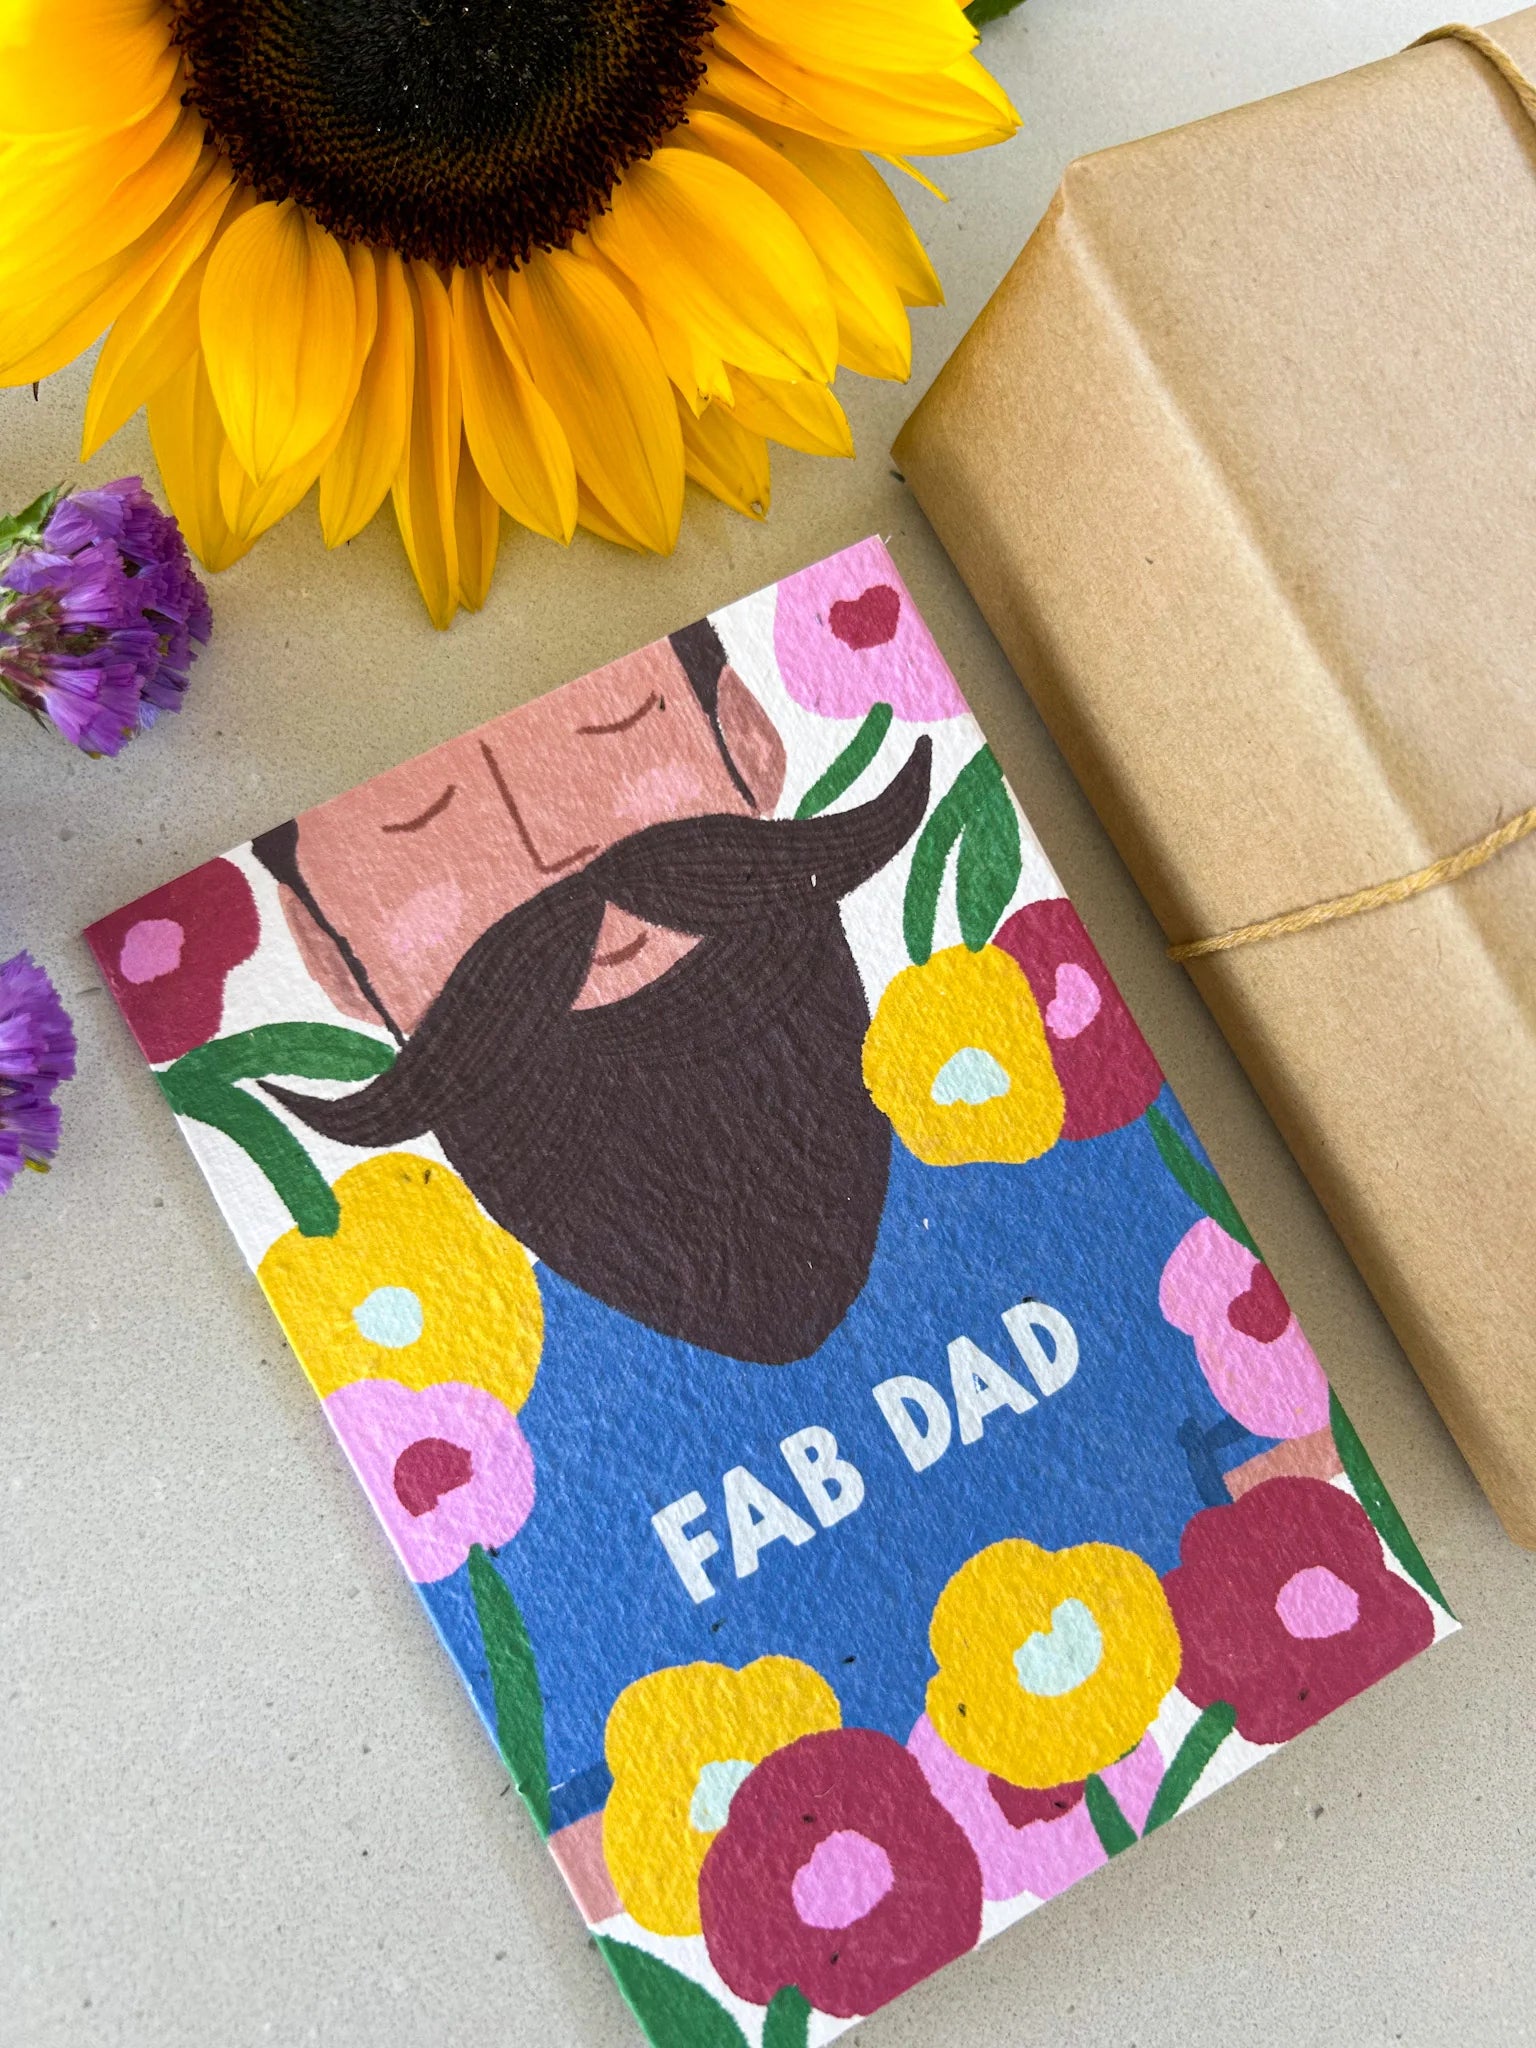 Plantable Card - Fab Dad